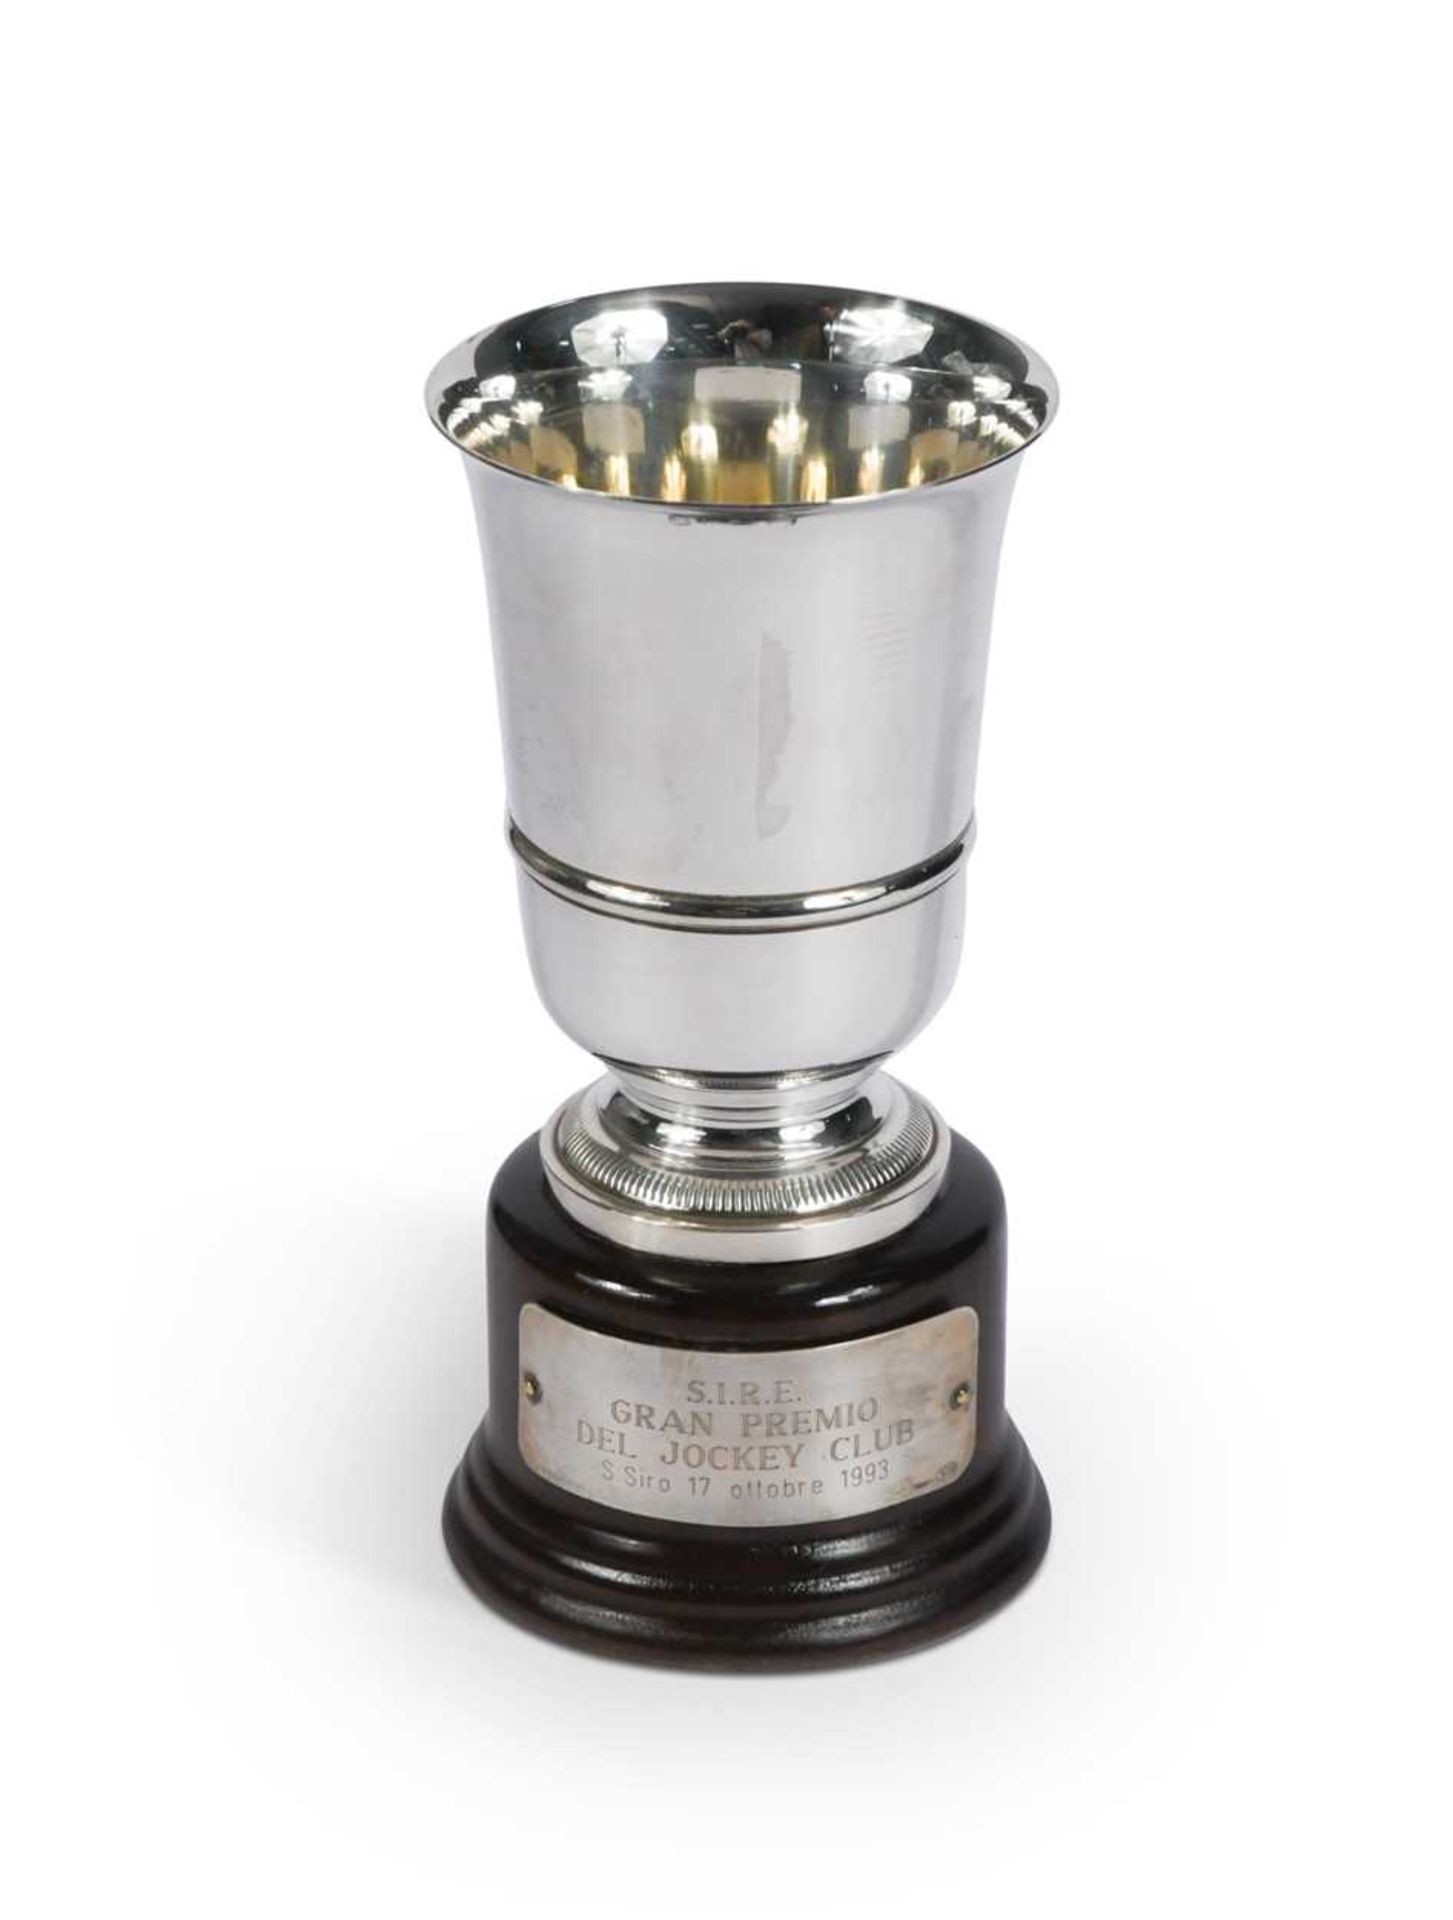 A S.I.R.E Gran Premio del Jockey Club continental silver trophy cup, awarded to Frankie Dettori,